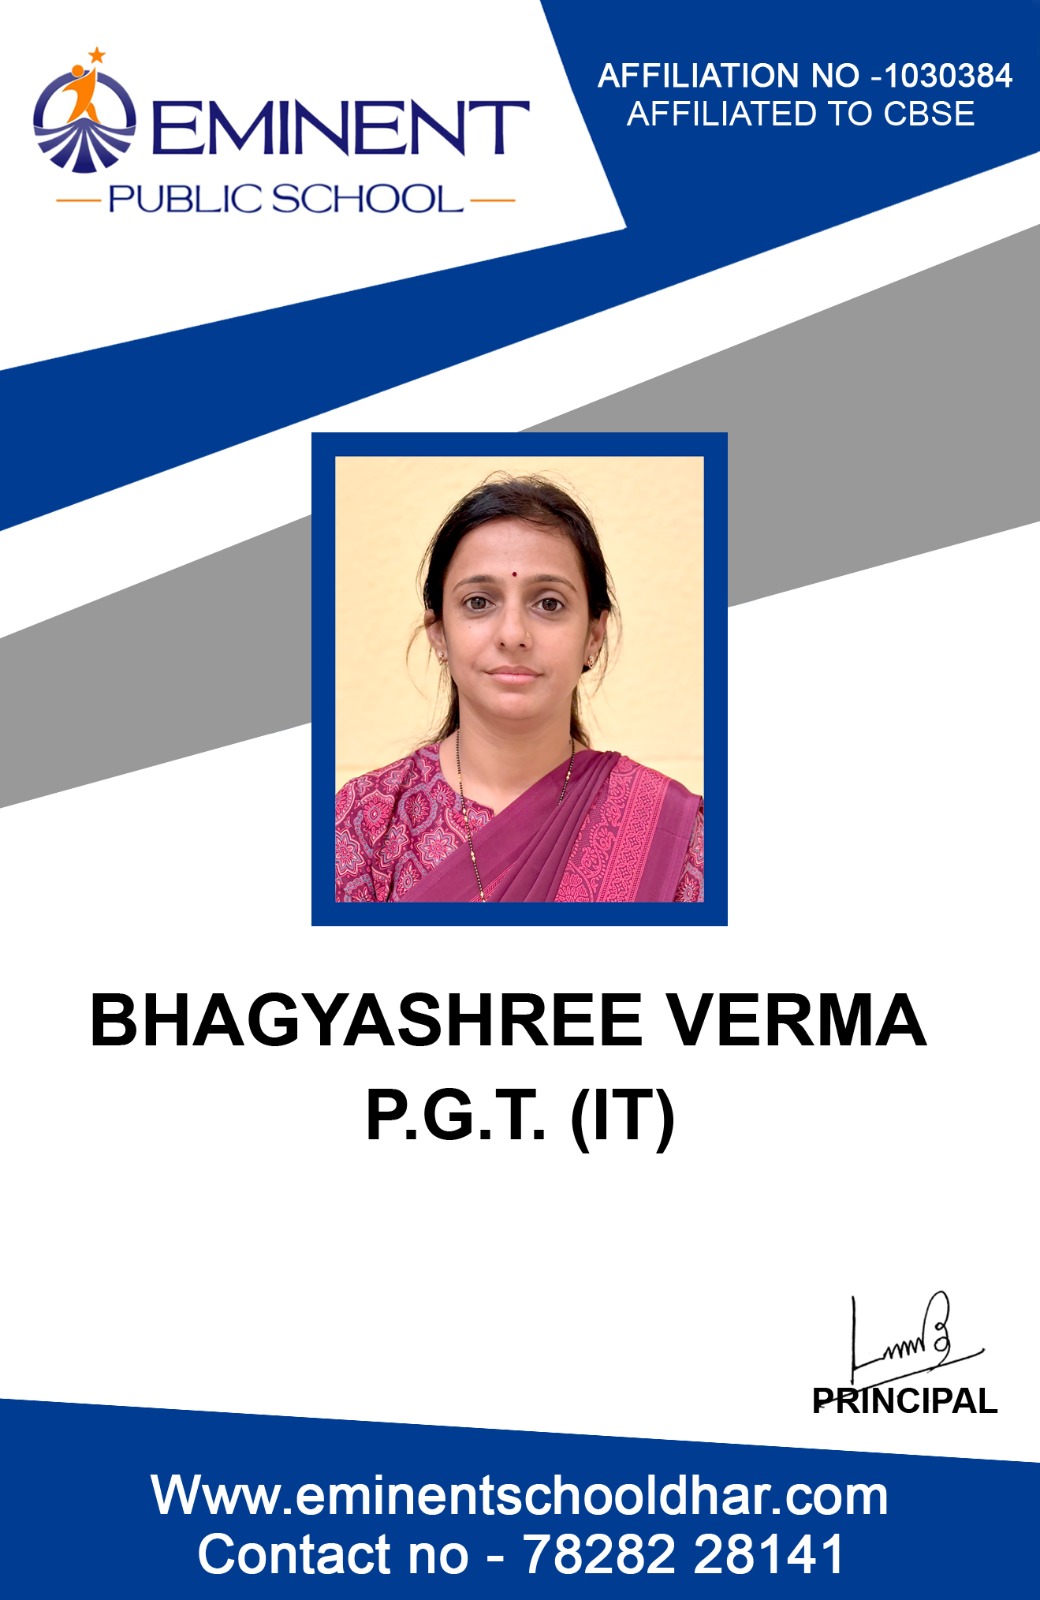 MRS. BHAGYASHREE VERMA